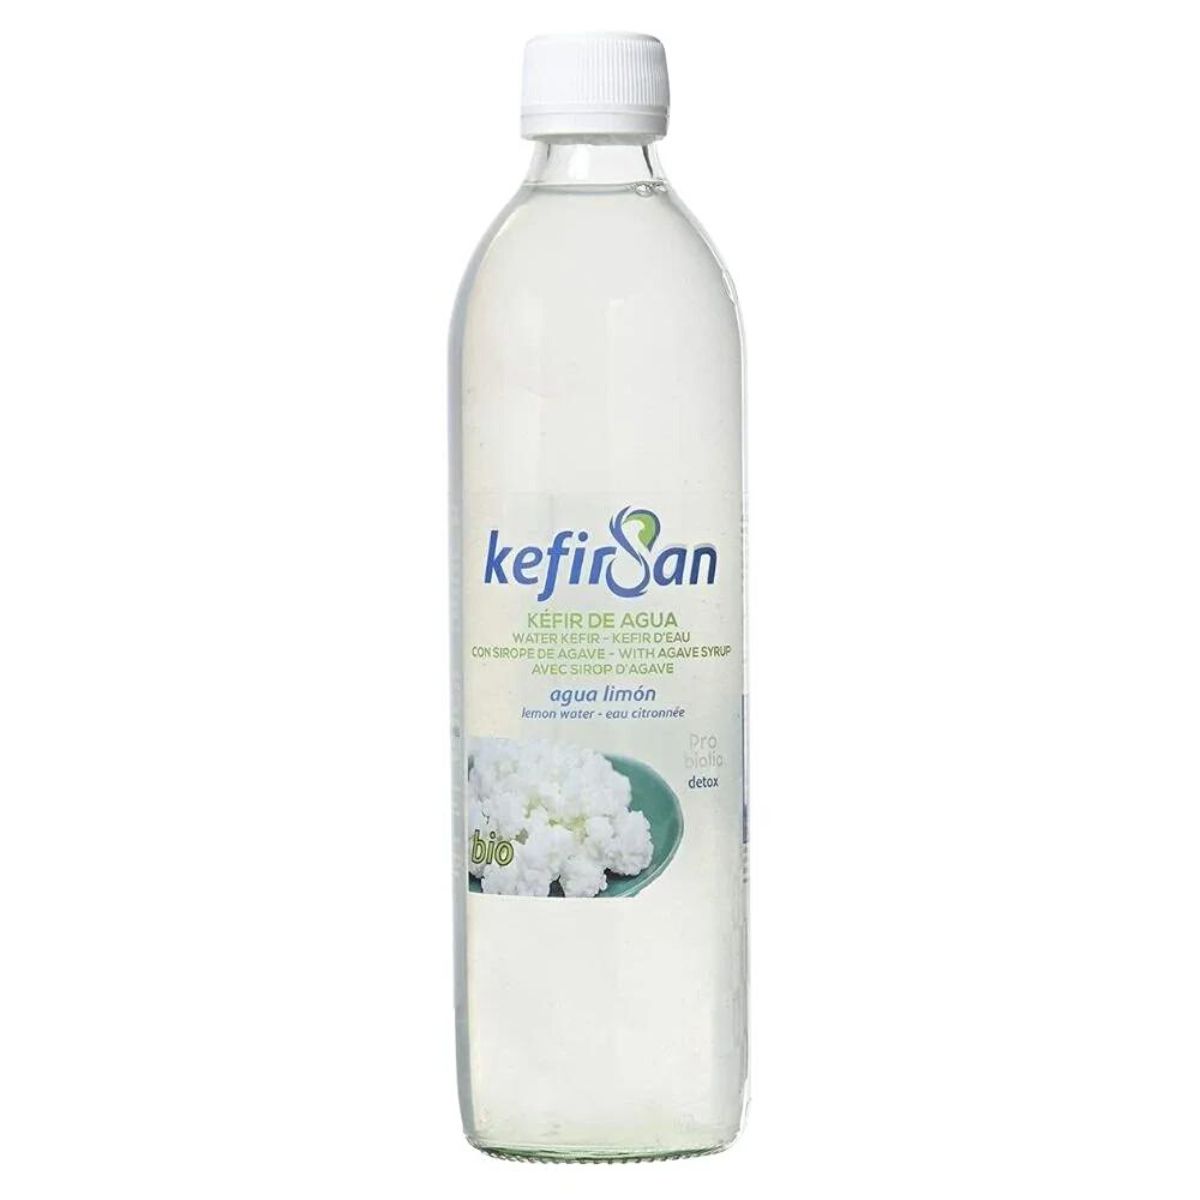 Kefir de agua sabor limon y jengibre cont. 500 ml artesanal – CaliFrut  Bolivia